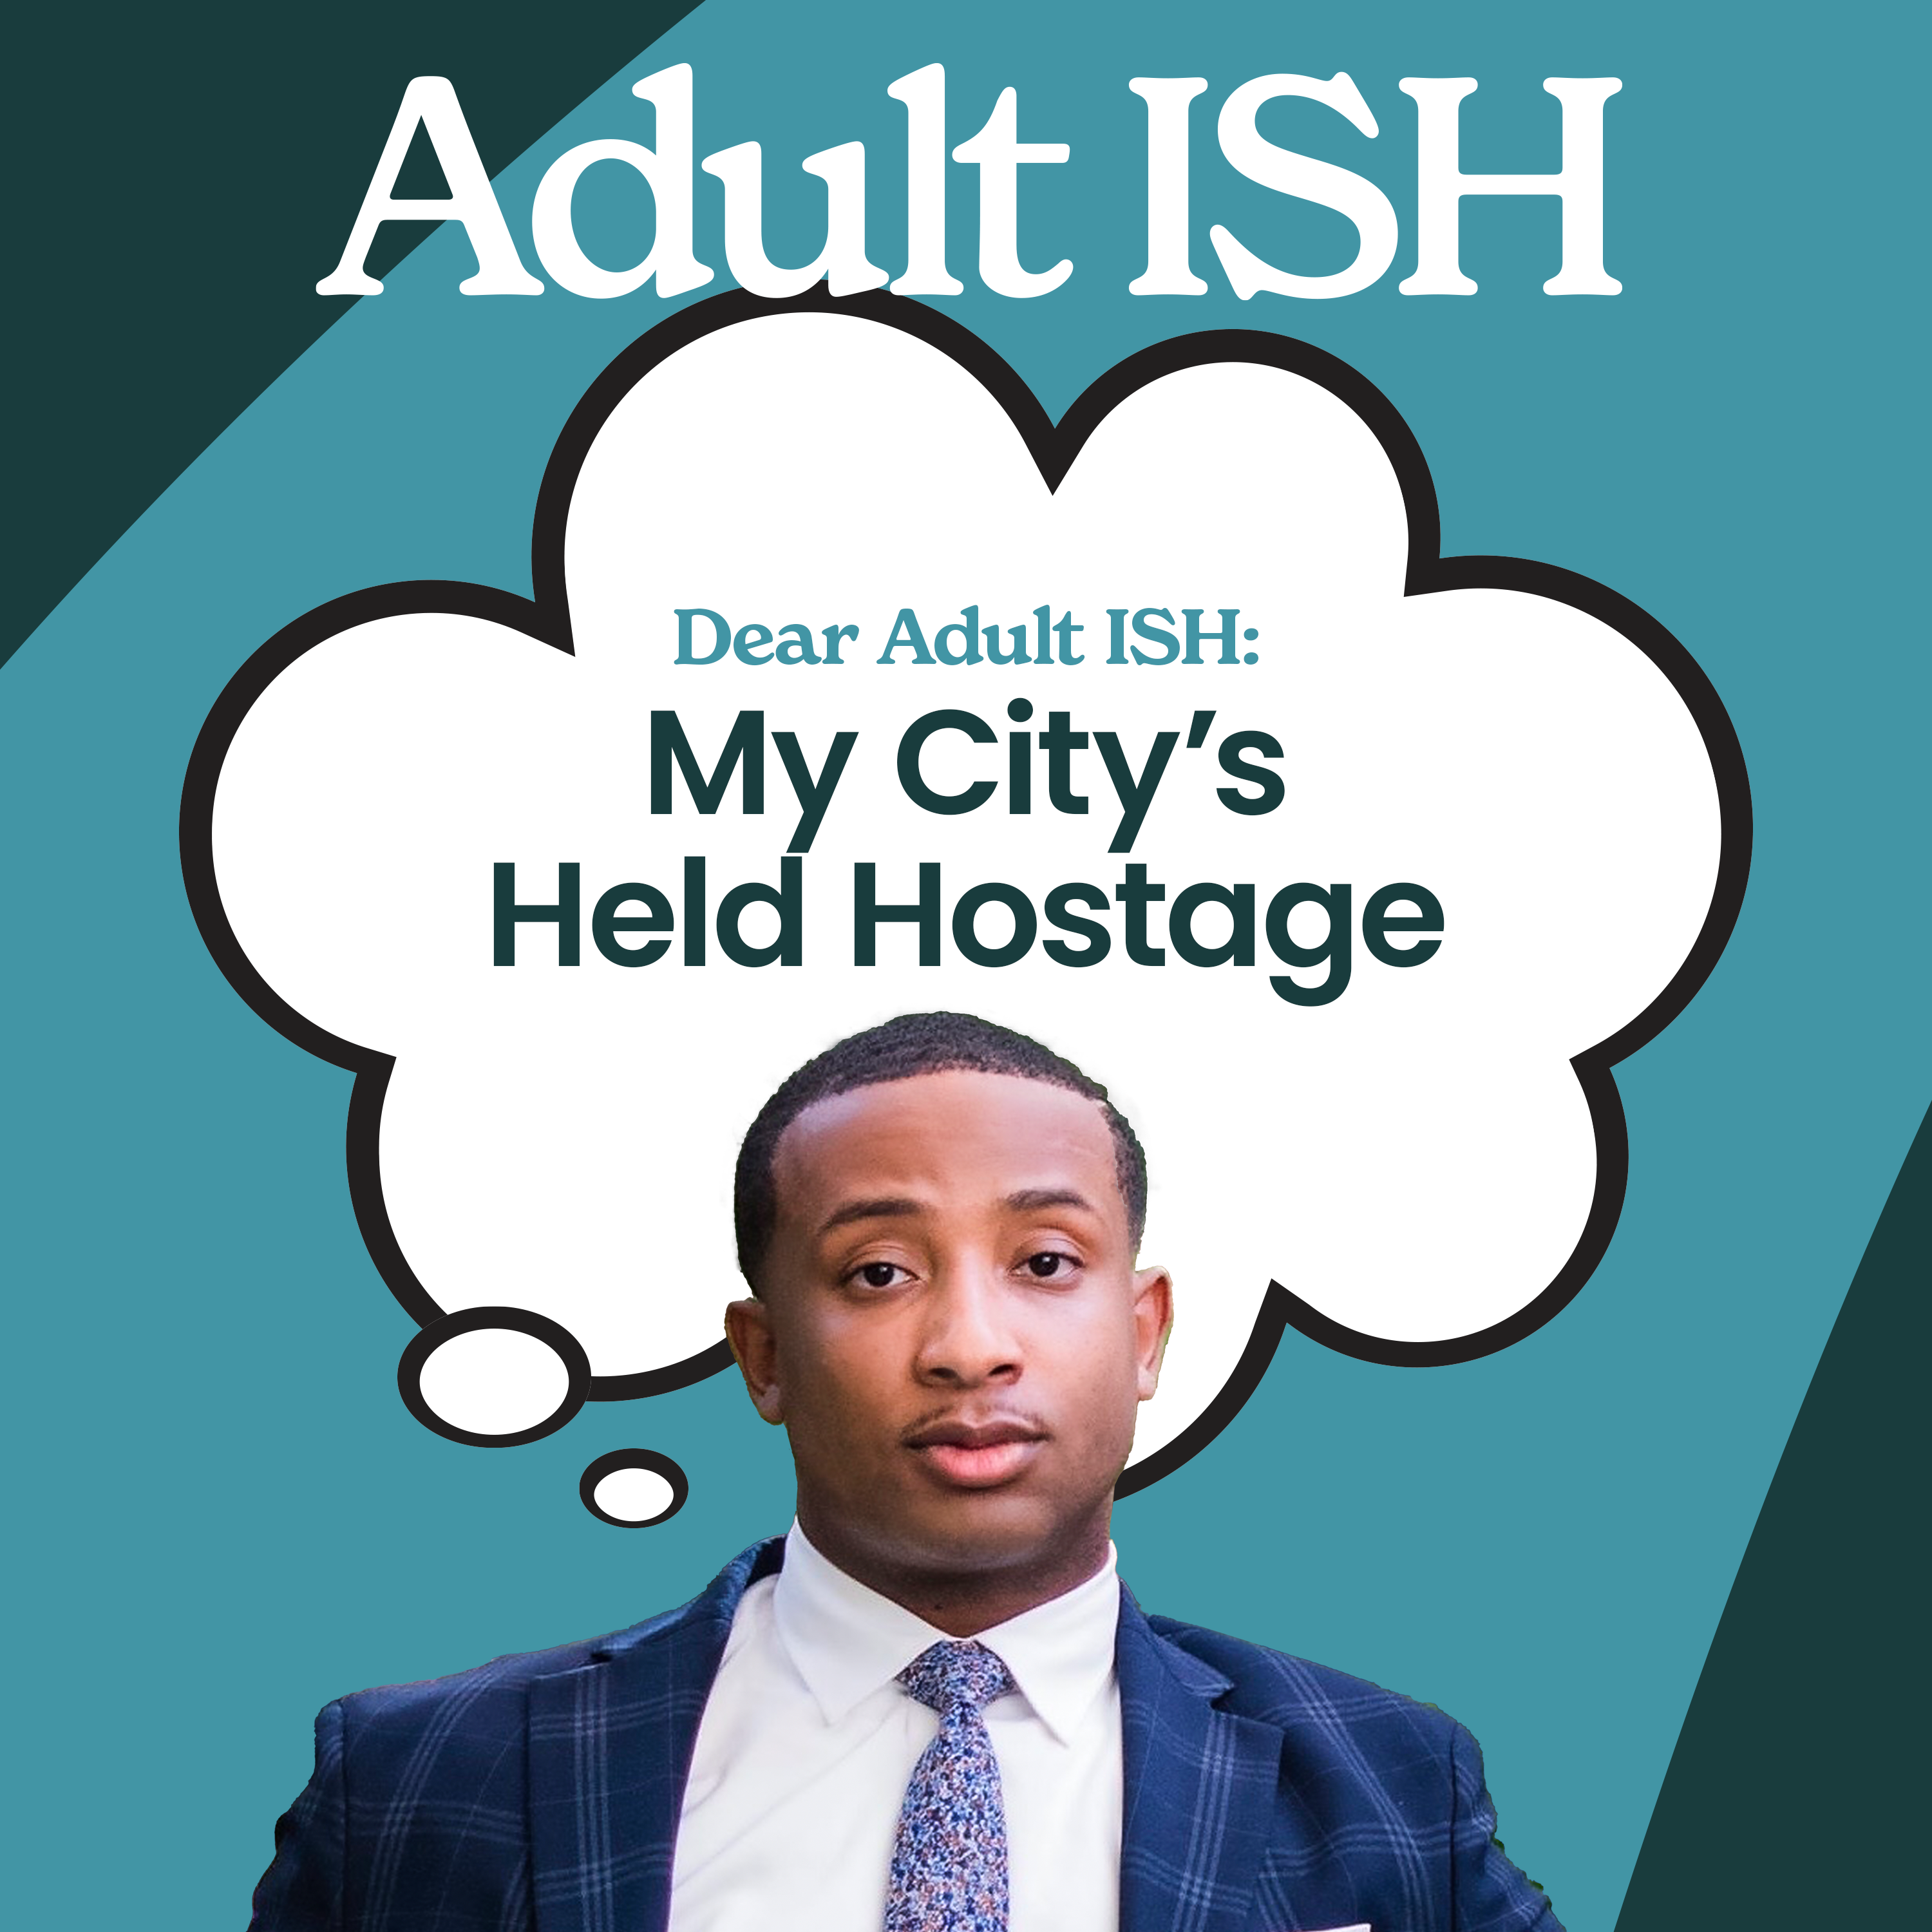 Dear Adult ISH: My City’s Held Hostage